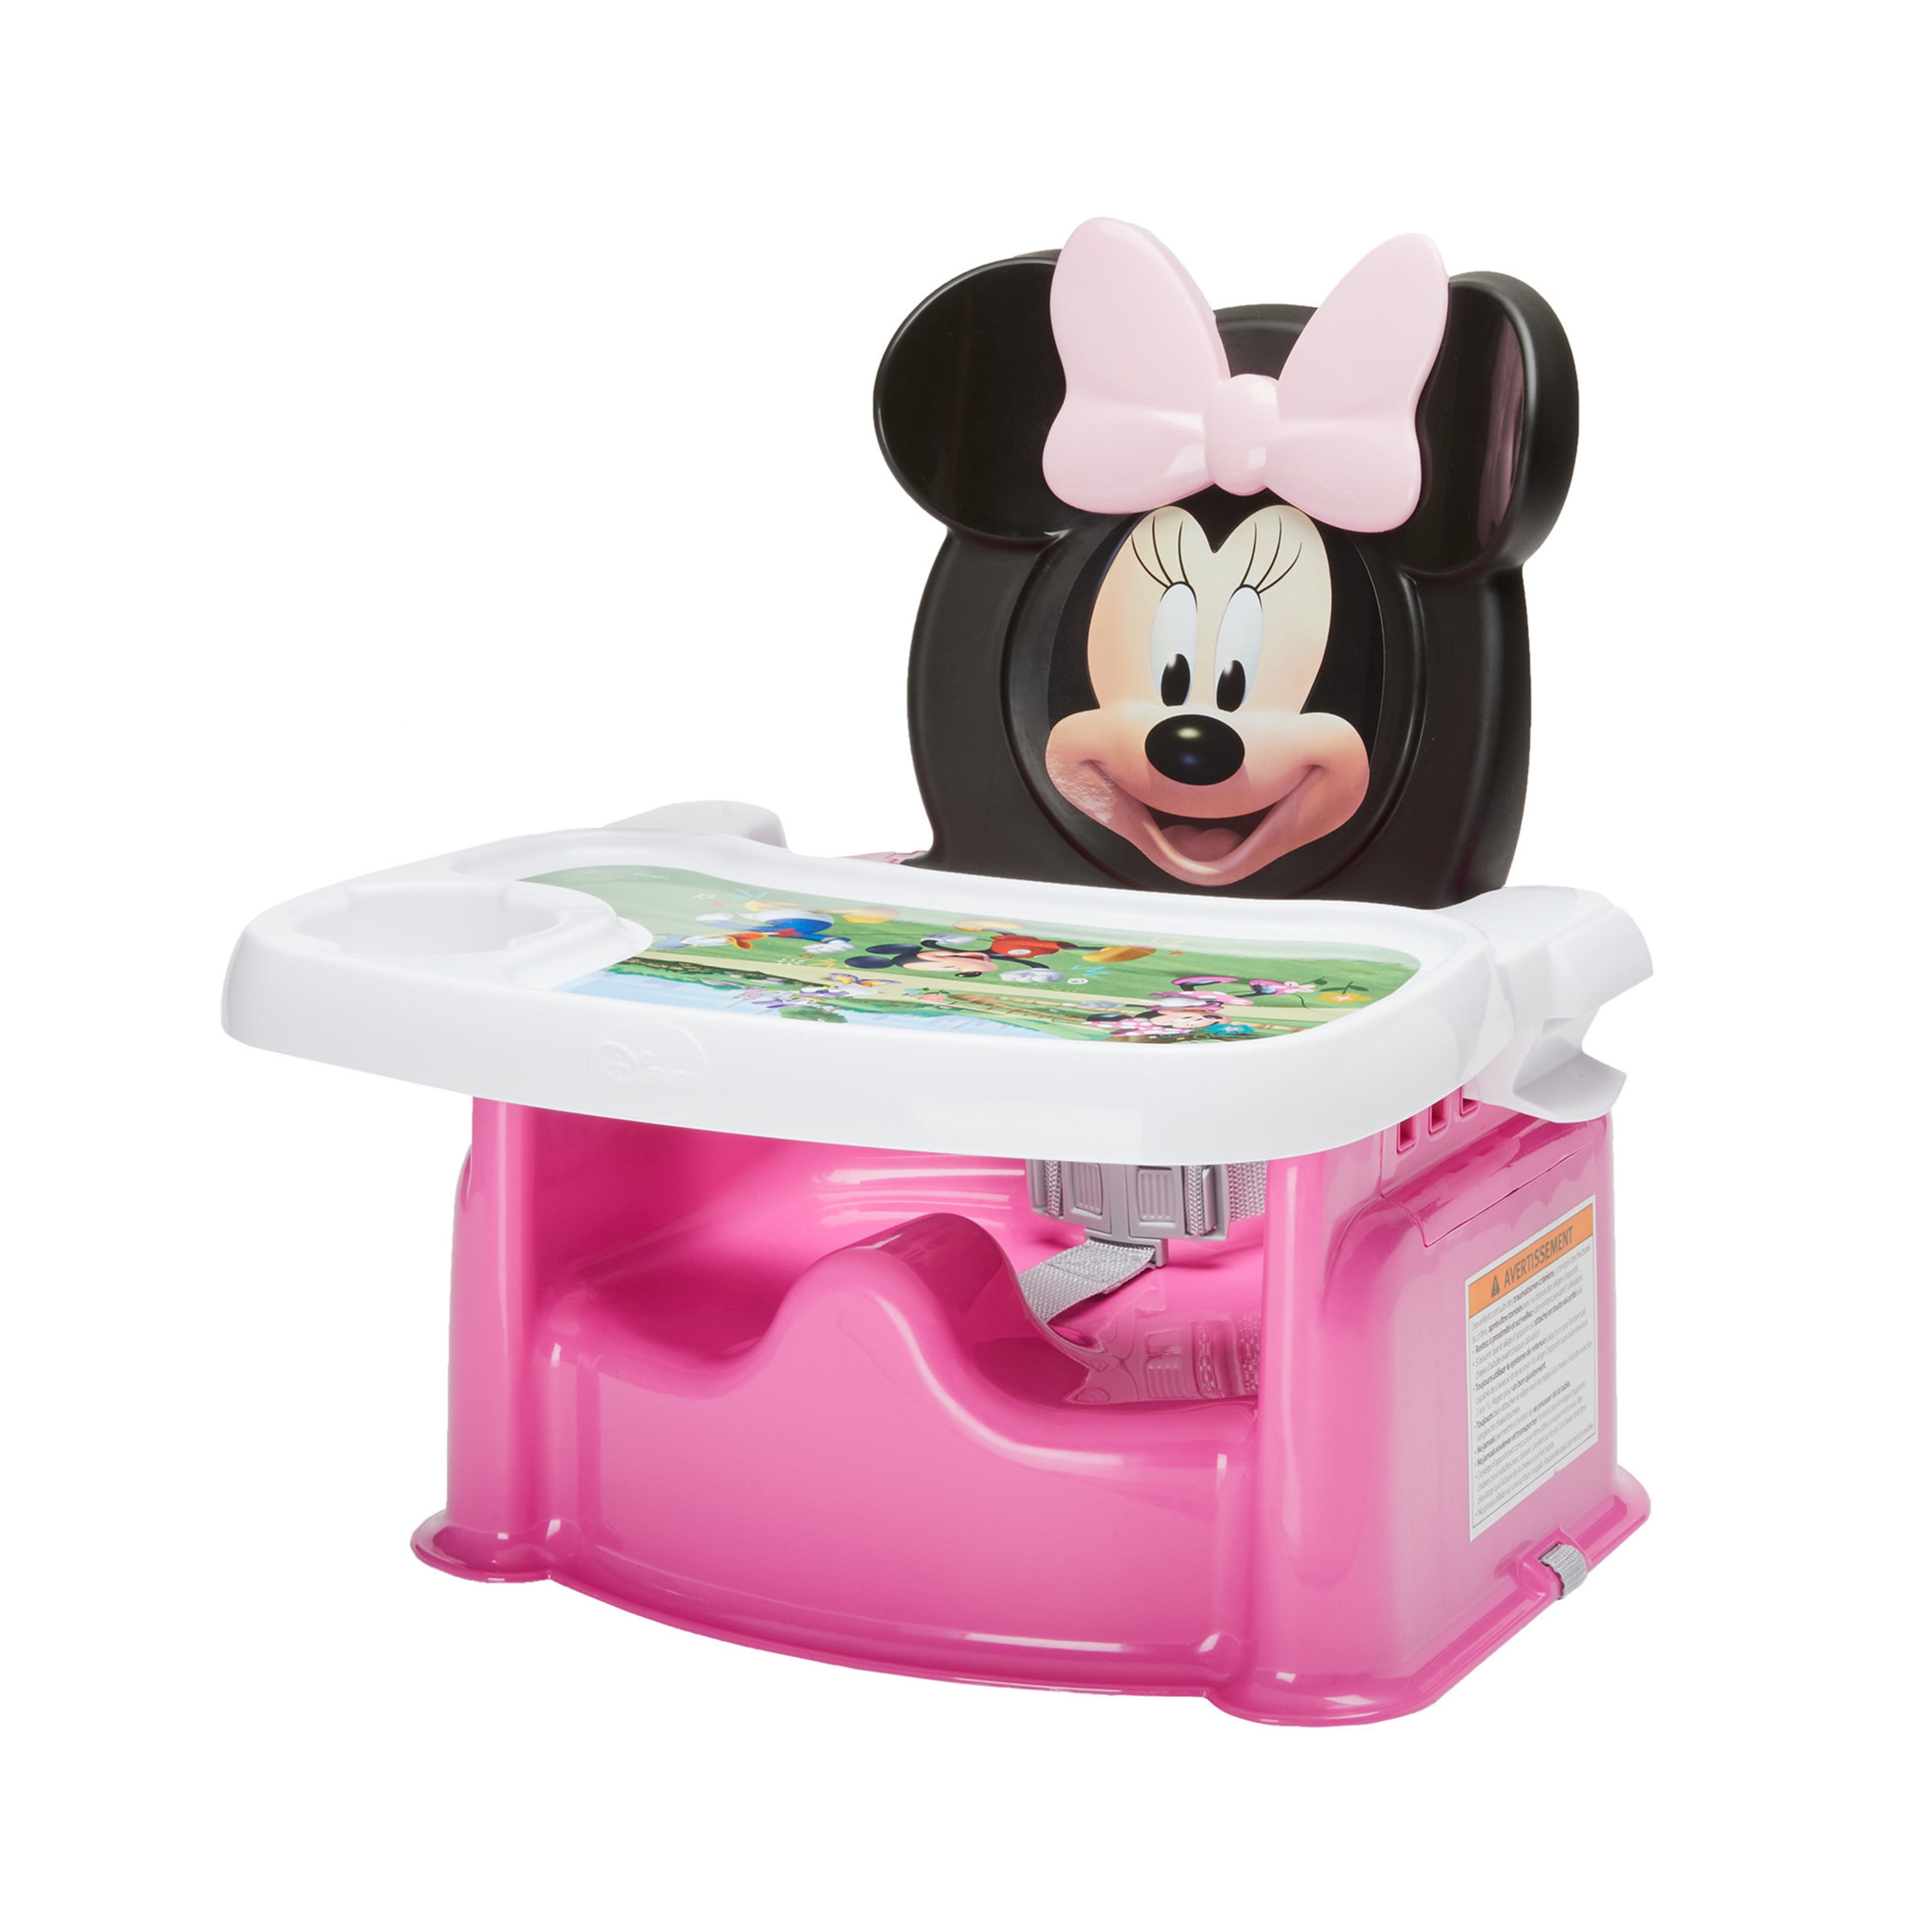 Disney Soft Padded Minnie Mickey Mouse Pink Blue Kids Potty Toilet Training Seat 